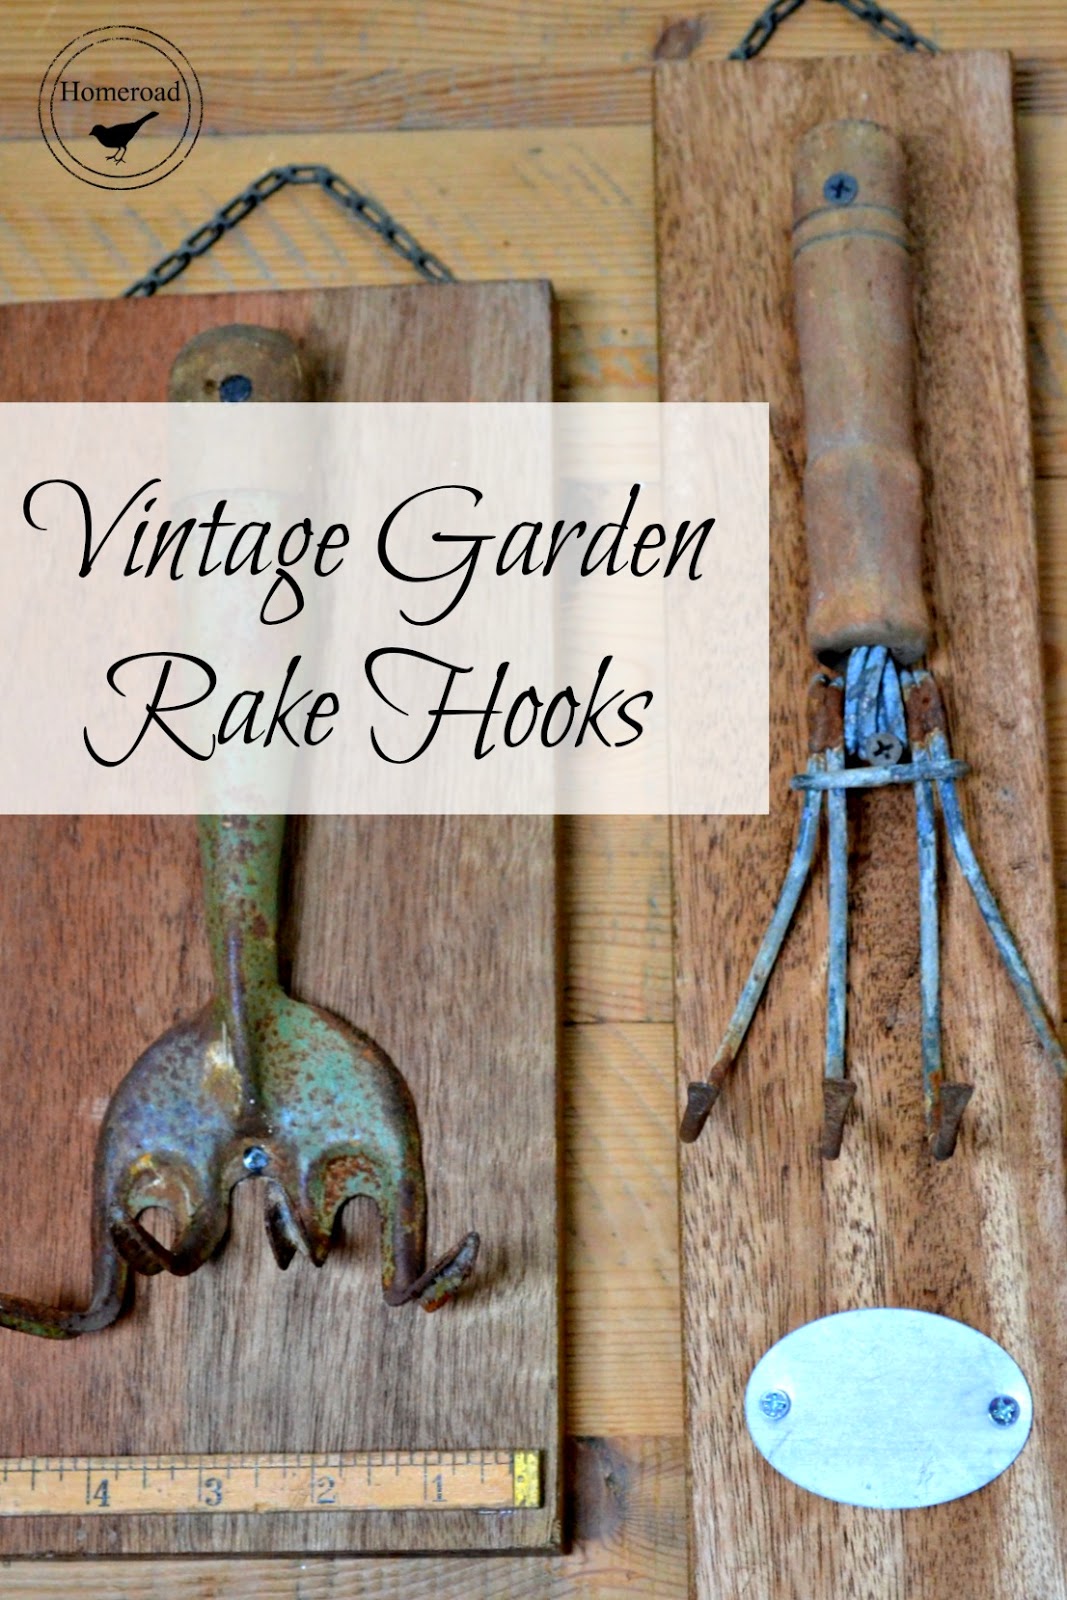 Vintage garden rakes with overlay text